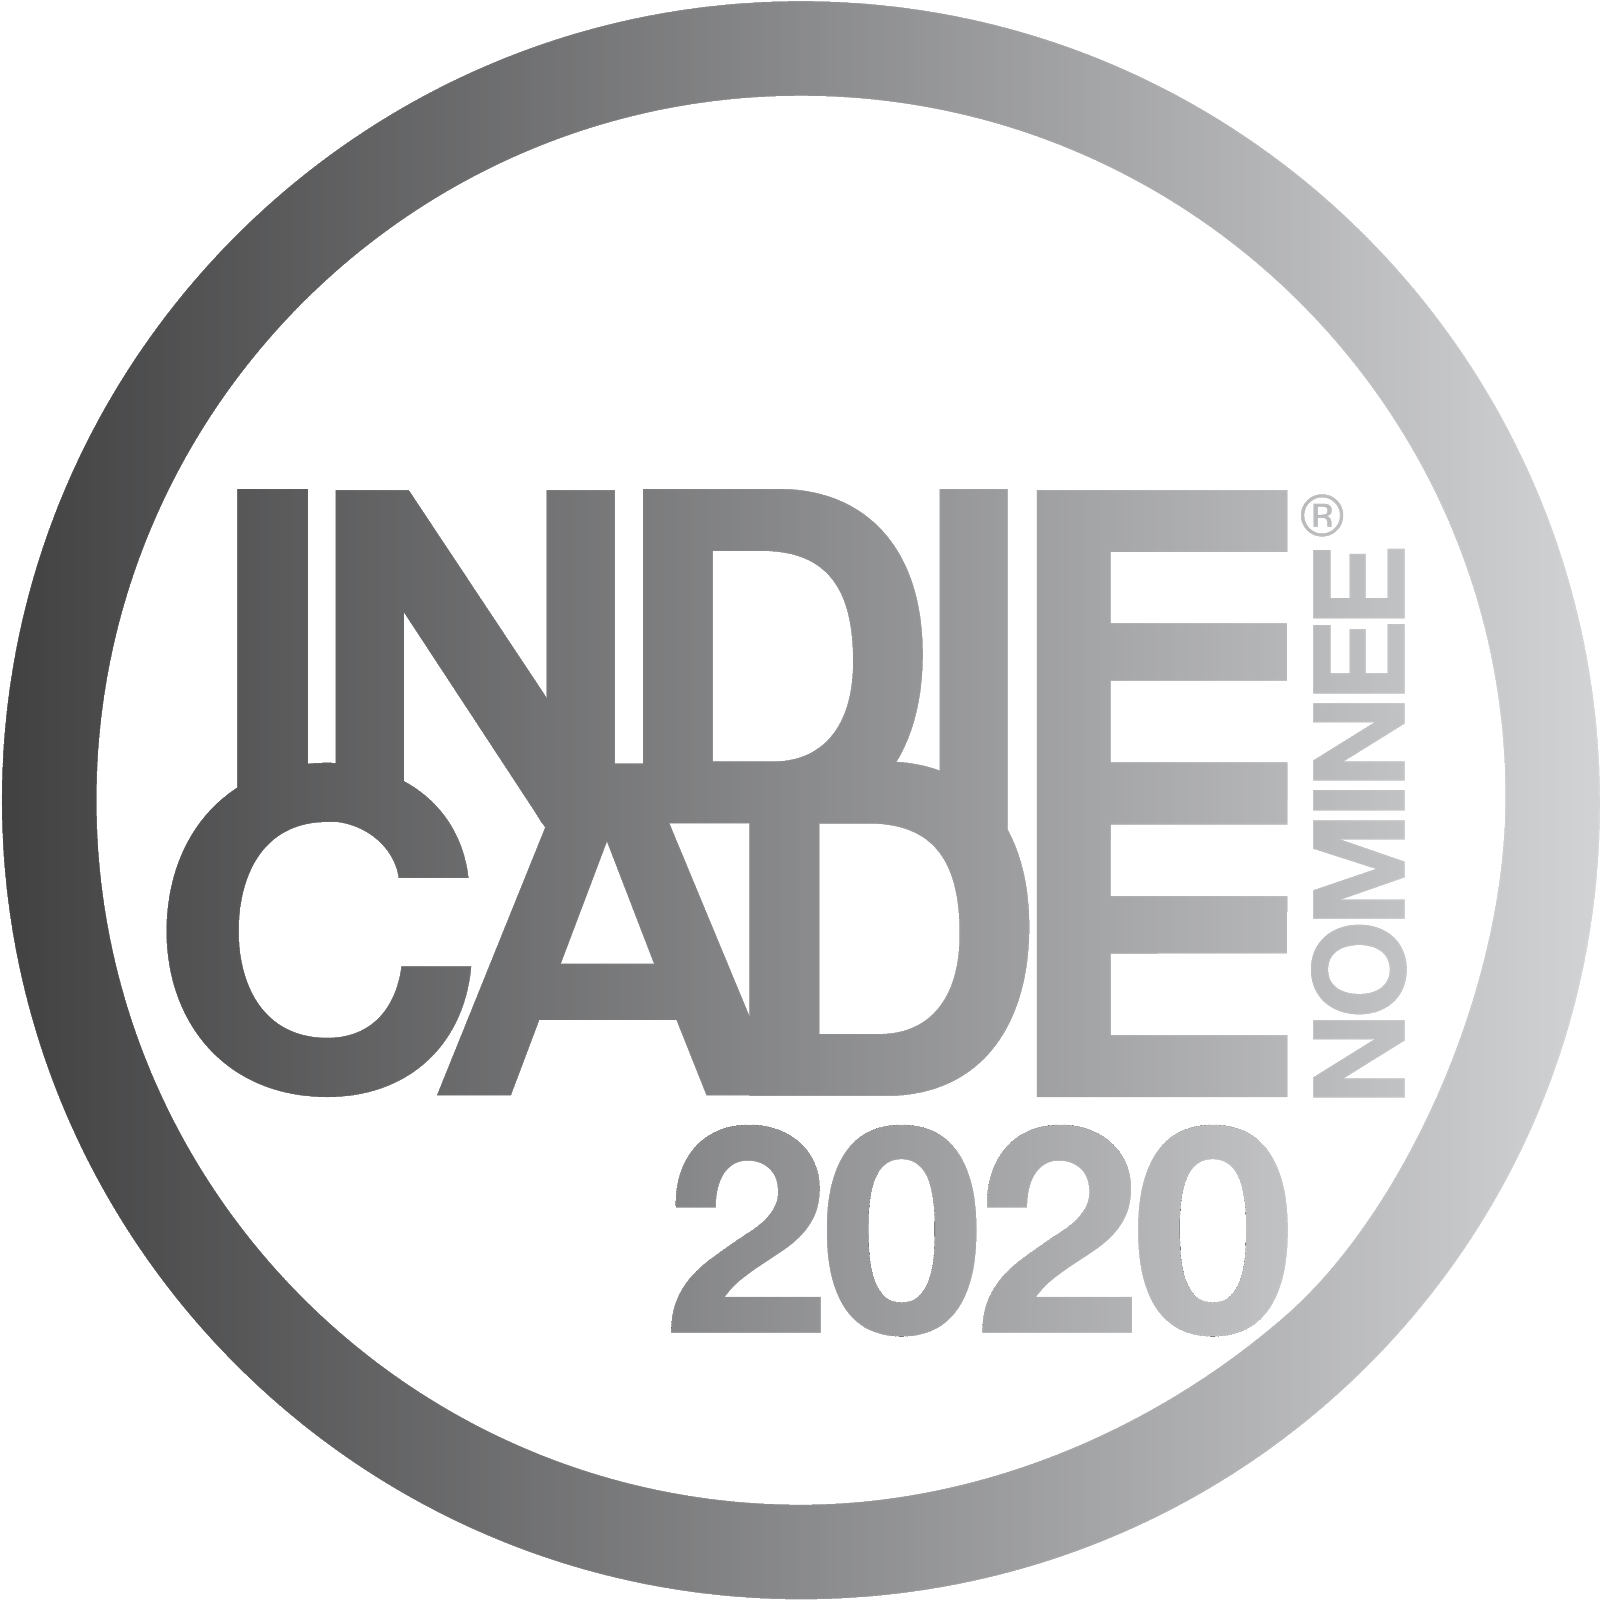 Indiecase 2020 nominee